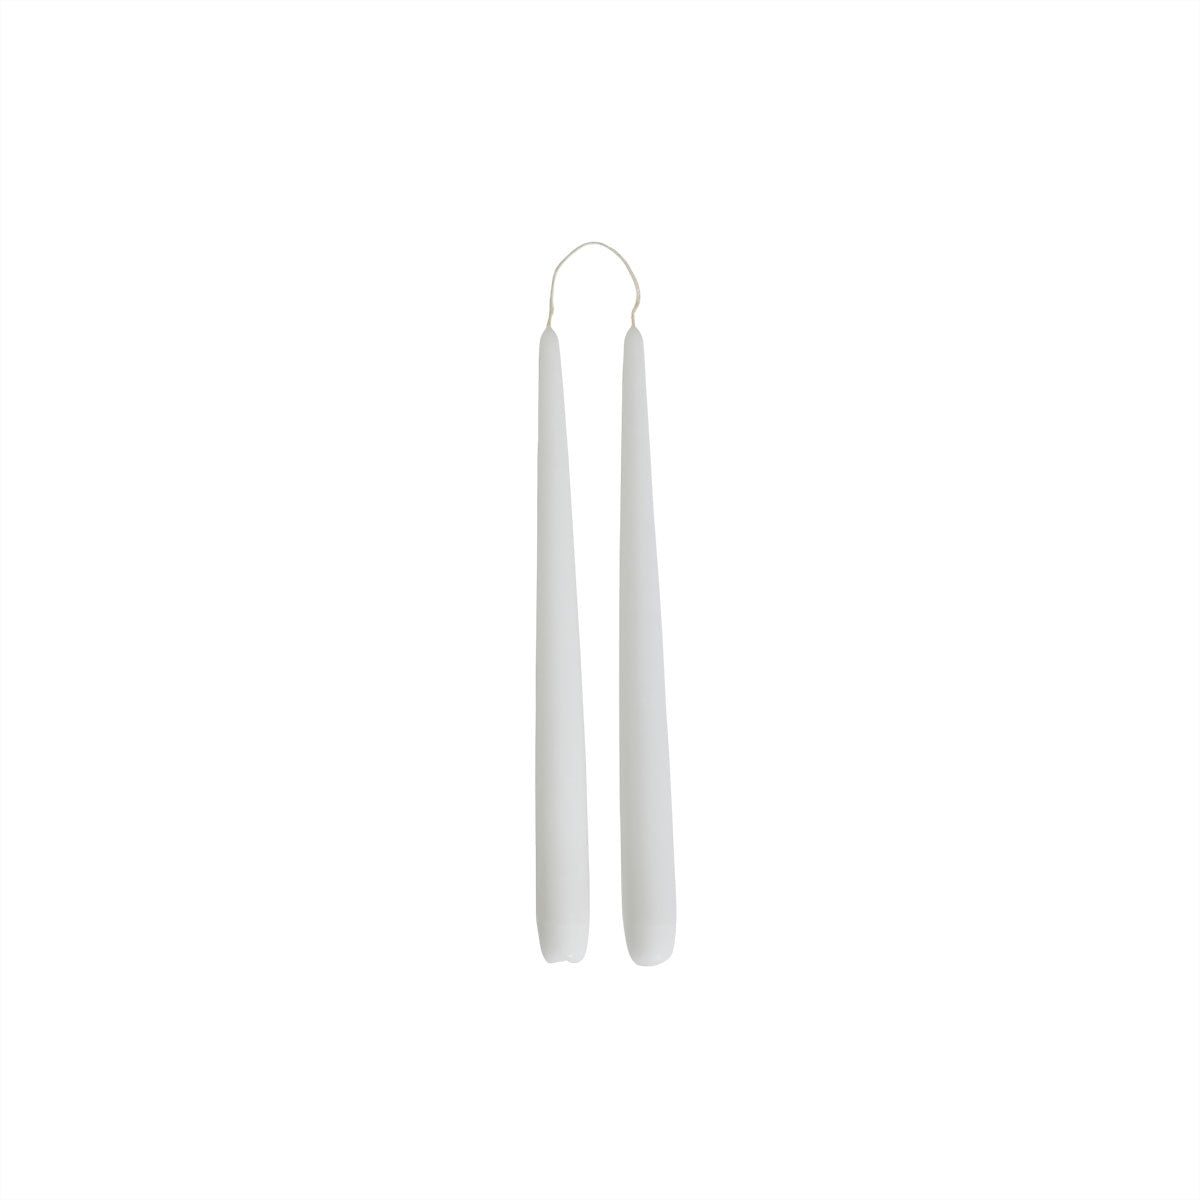 OYOY LIVING Fukai Candles - Medium - Pack of 2 Candle 101 White